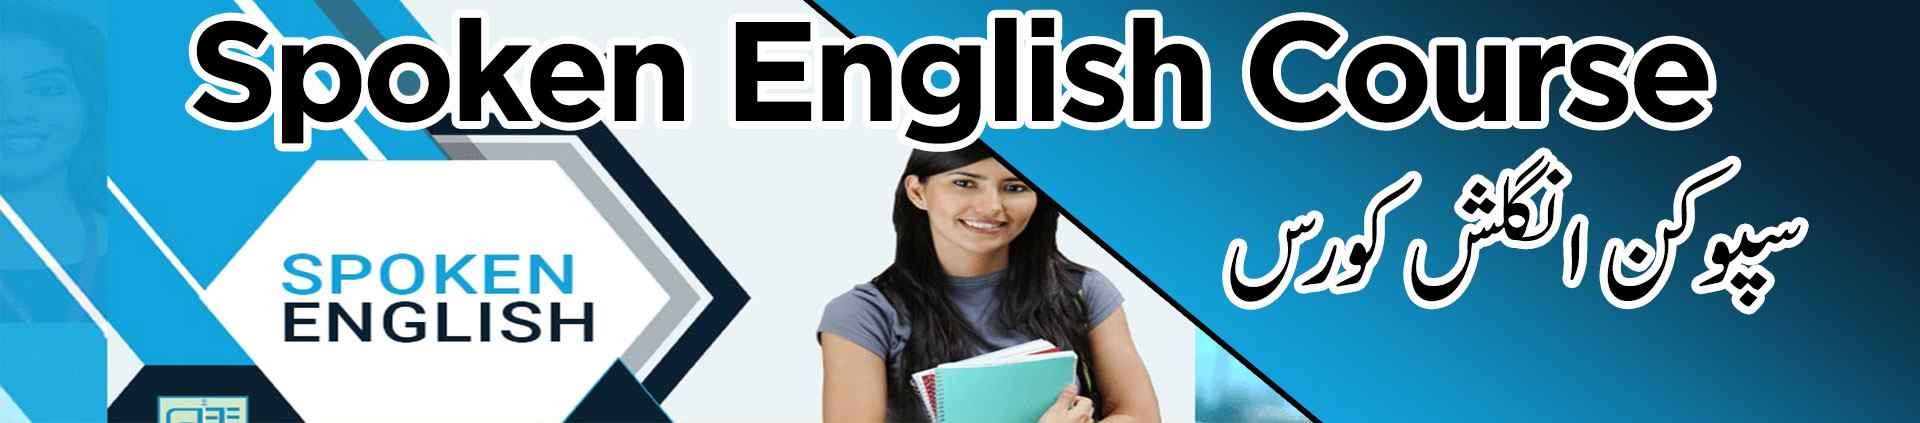 spoken english course institute mutlan